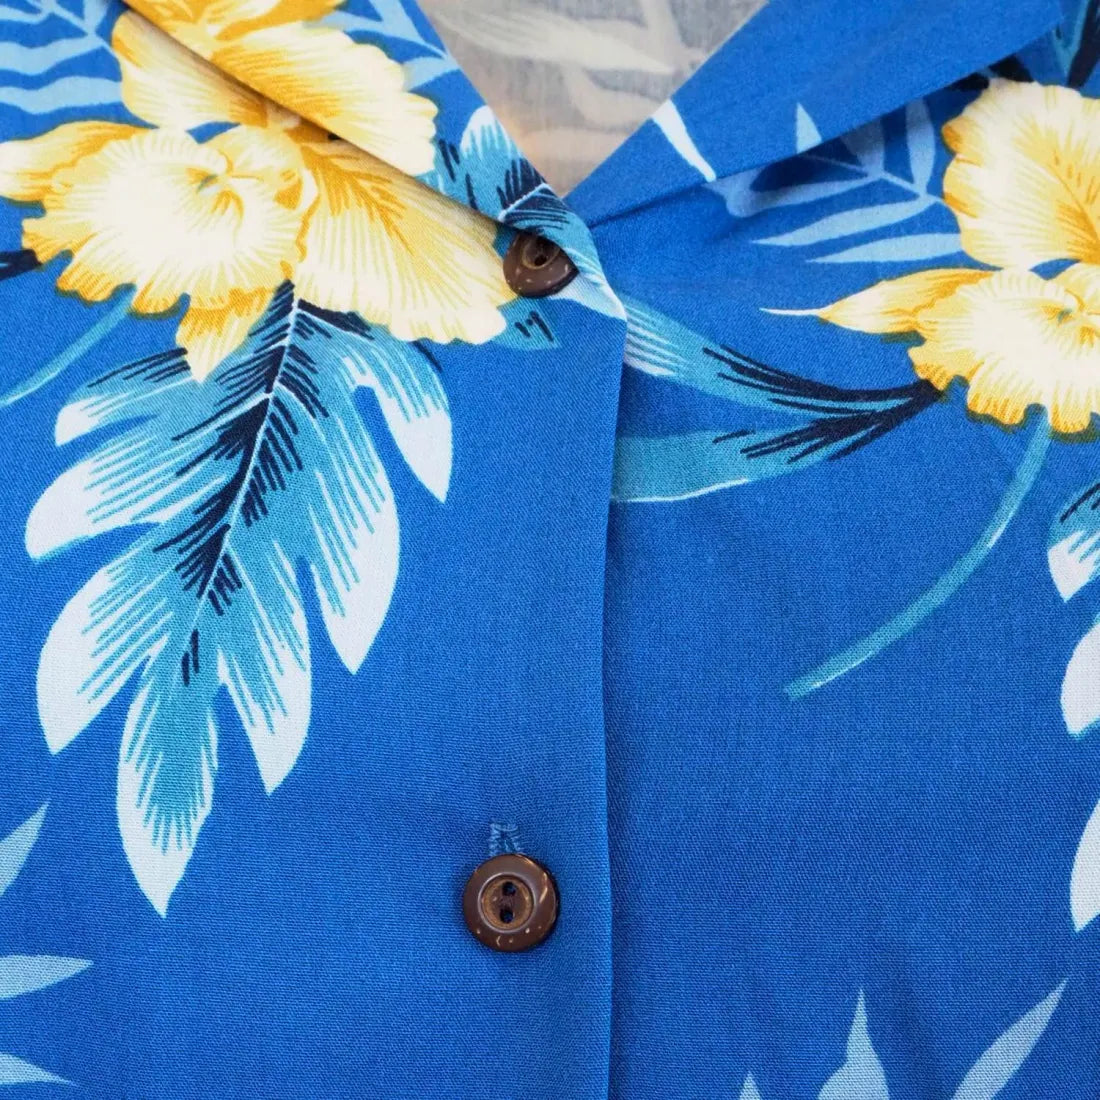 Midnight Blue Lady’s Hawaiian Sleeveless Blouse - Made In Hawaii